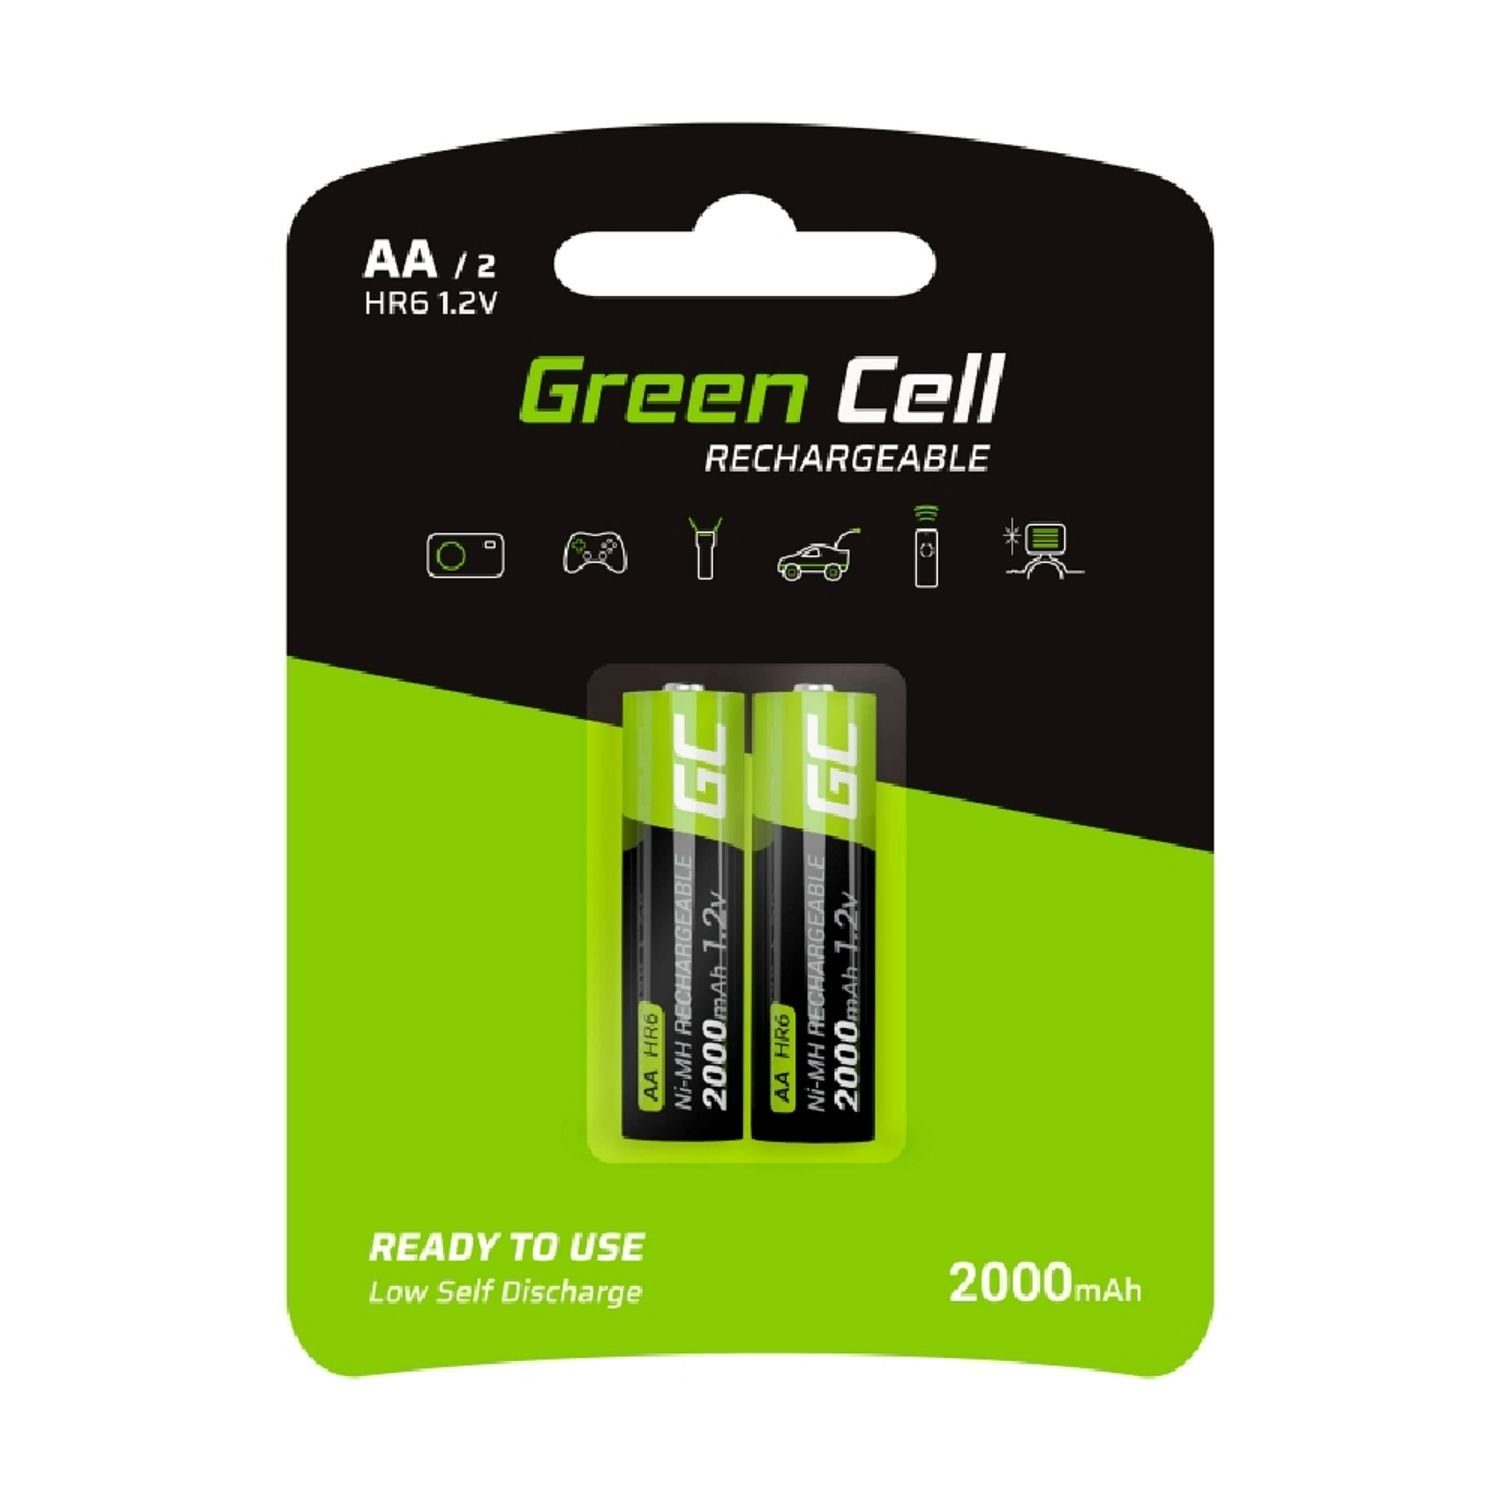 HR6 Nickel-Hydrid 2x 2000mAh Akkus Batterien AA Batterie Cell Akkumulator Green